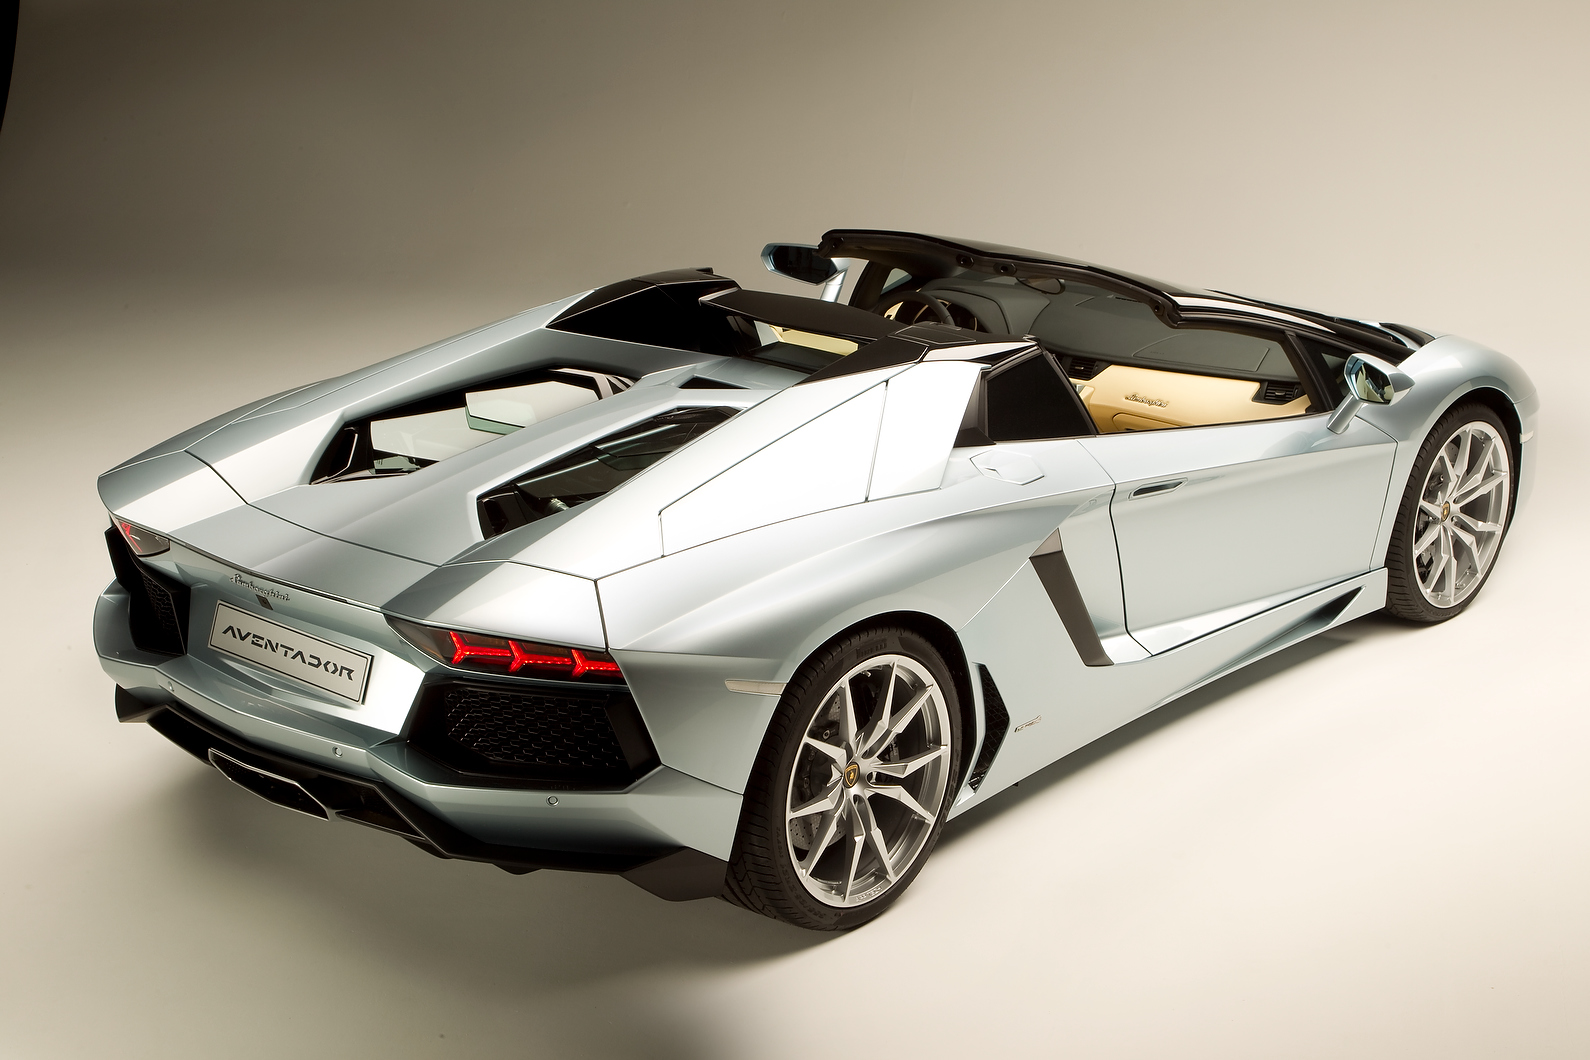 Lamborghini Aventador Roadster photo gallery - Autocar India